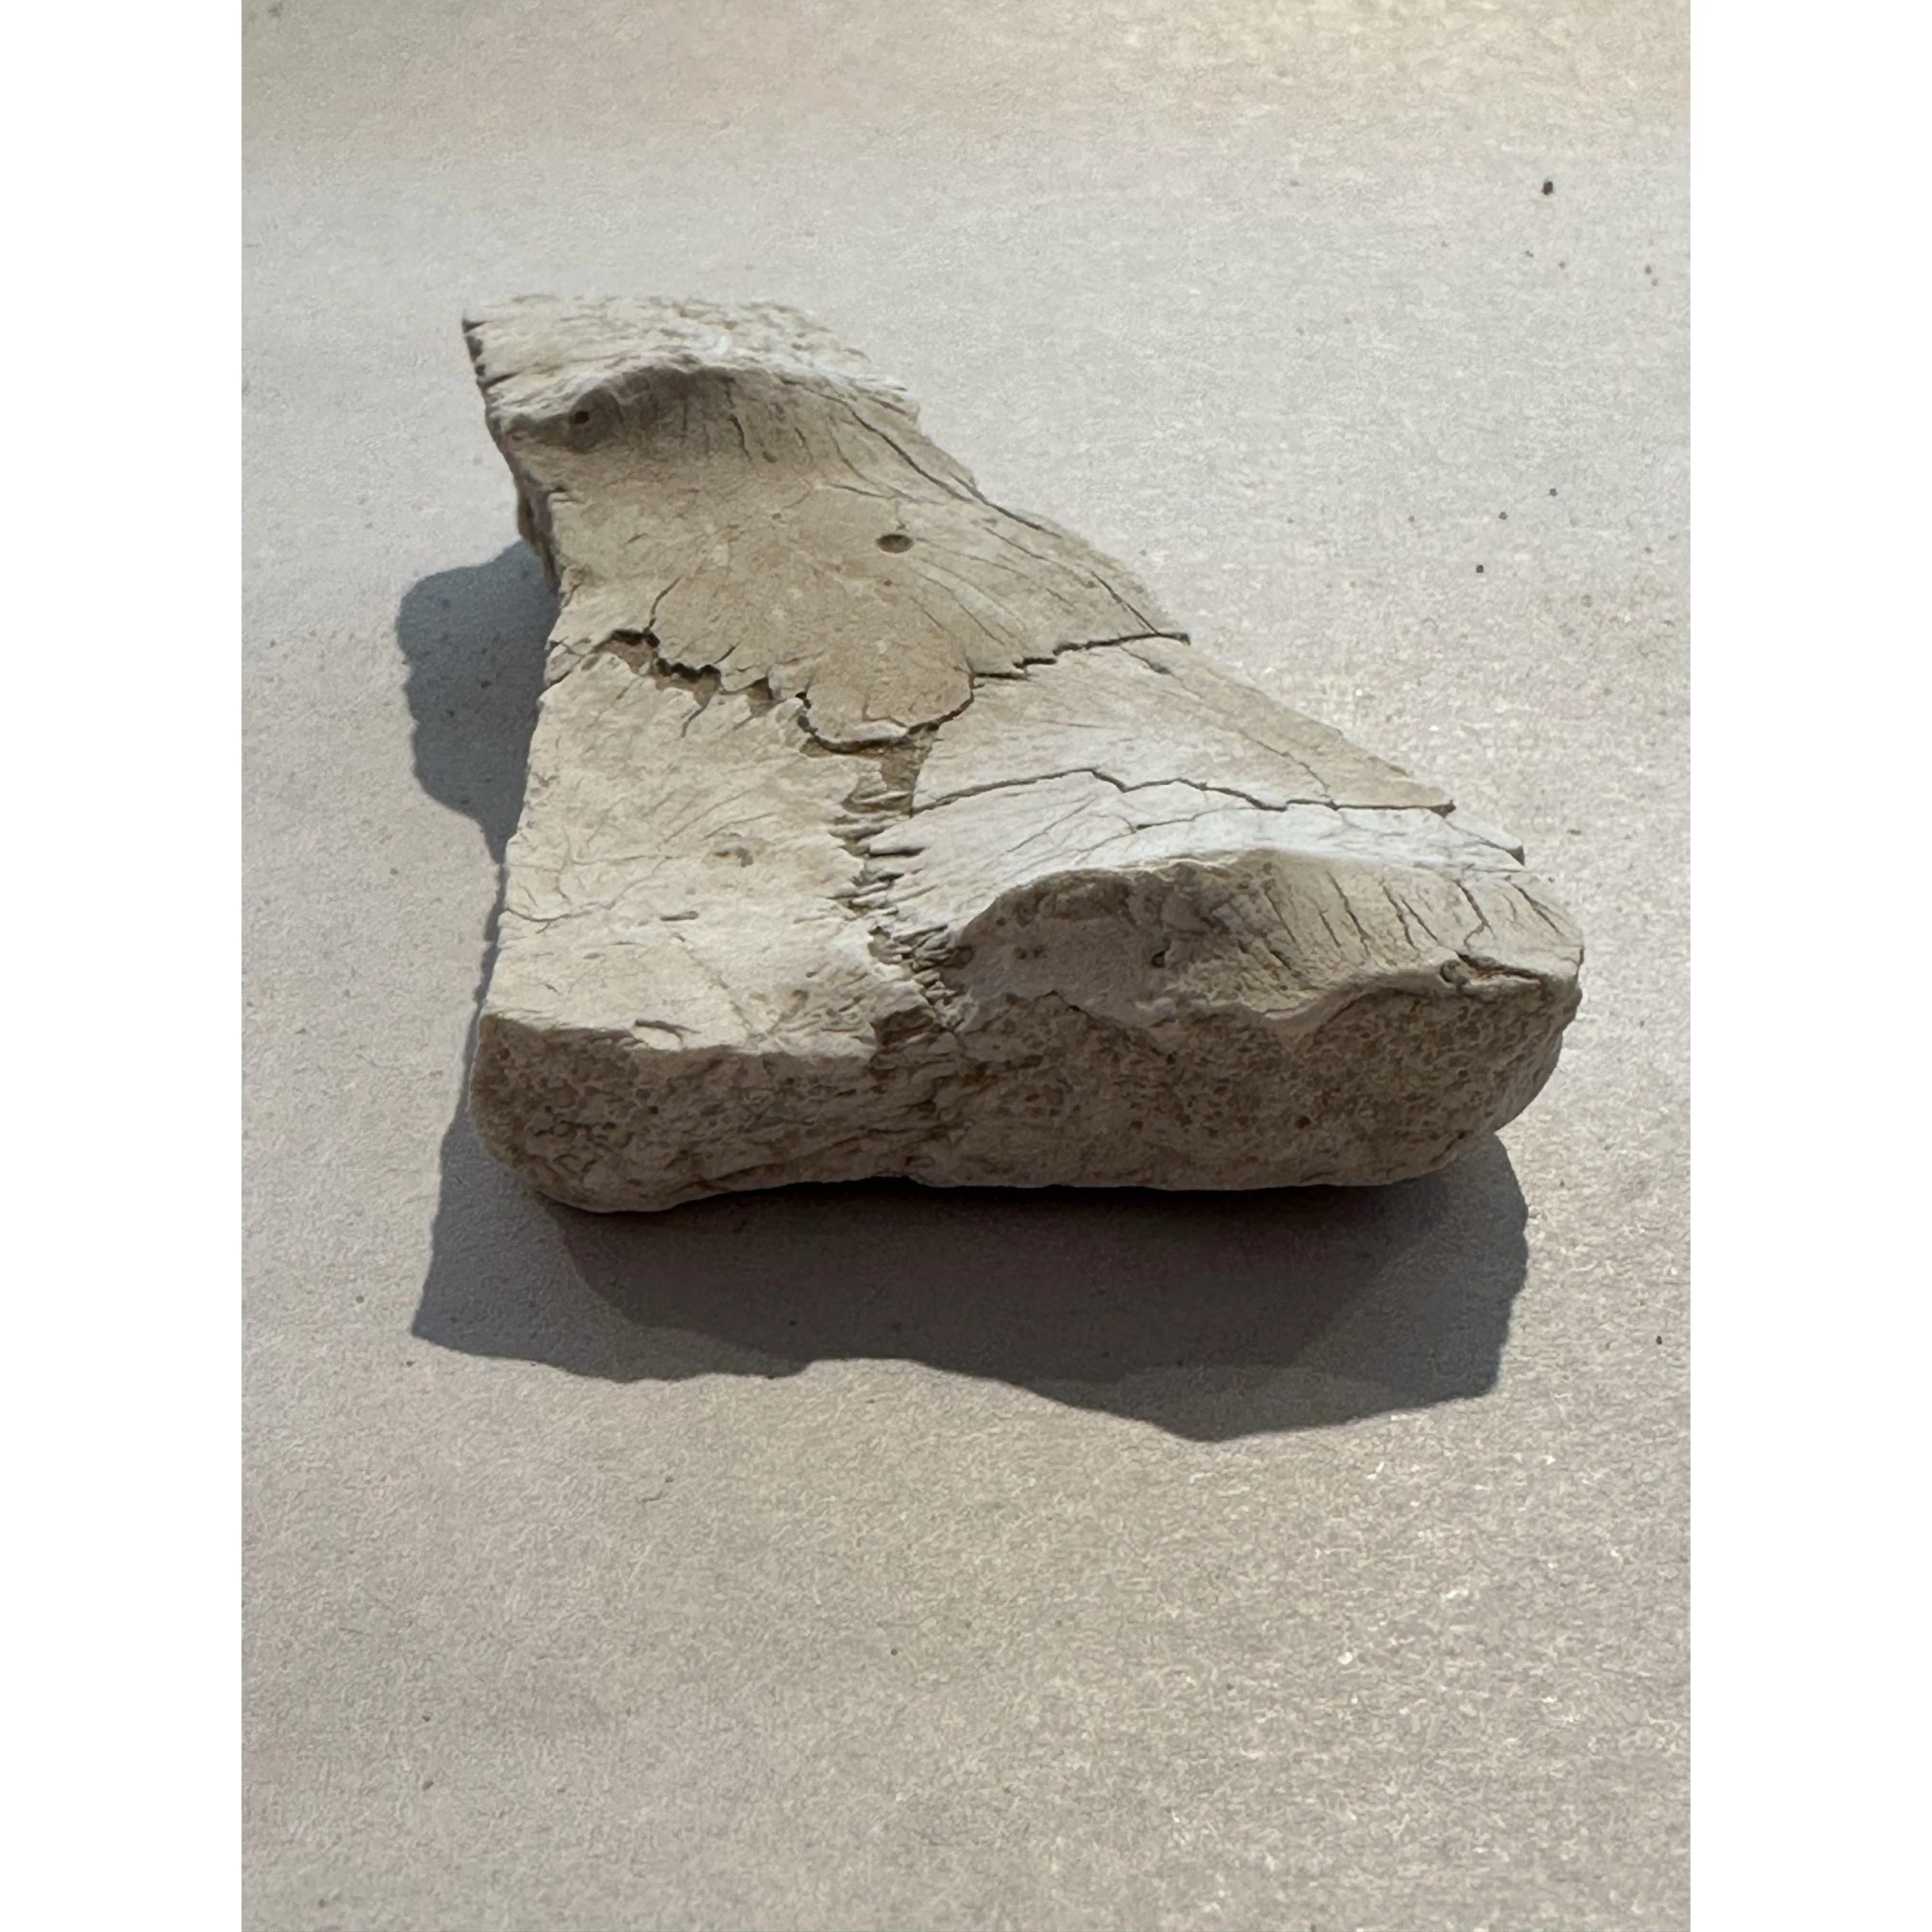 Turtle shell section, Oligocene age, Fossil Prehistoric Online